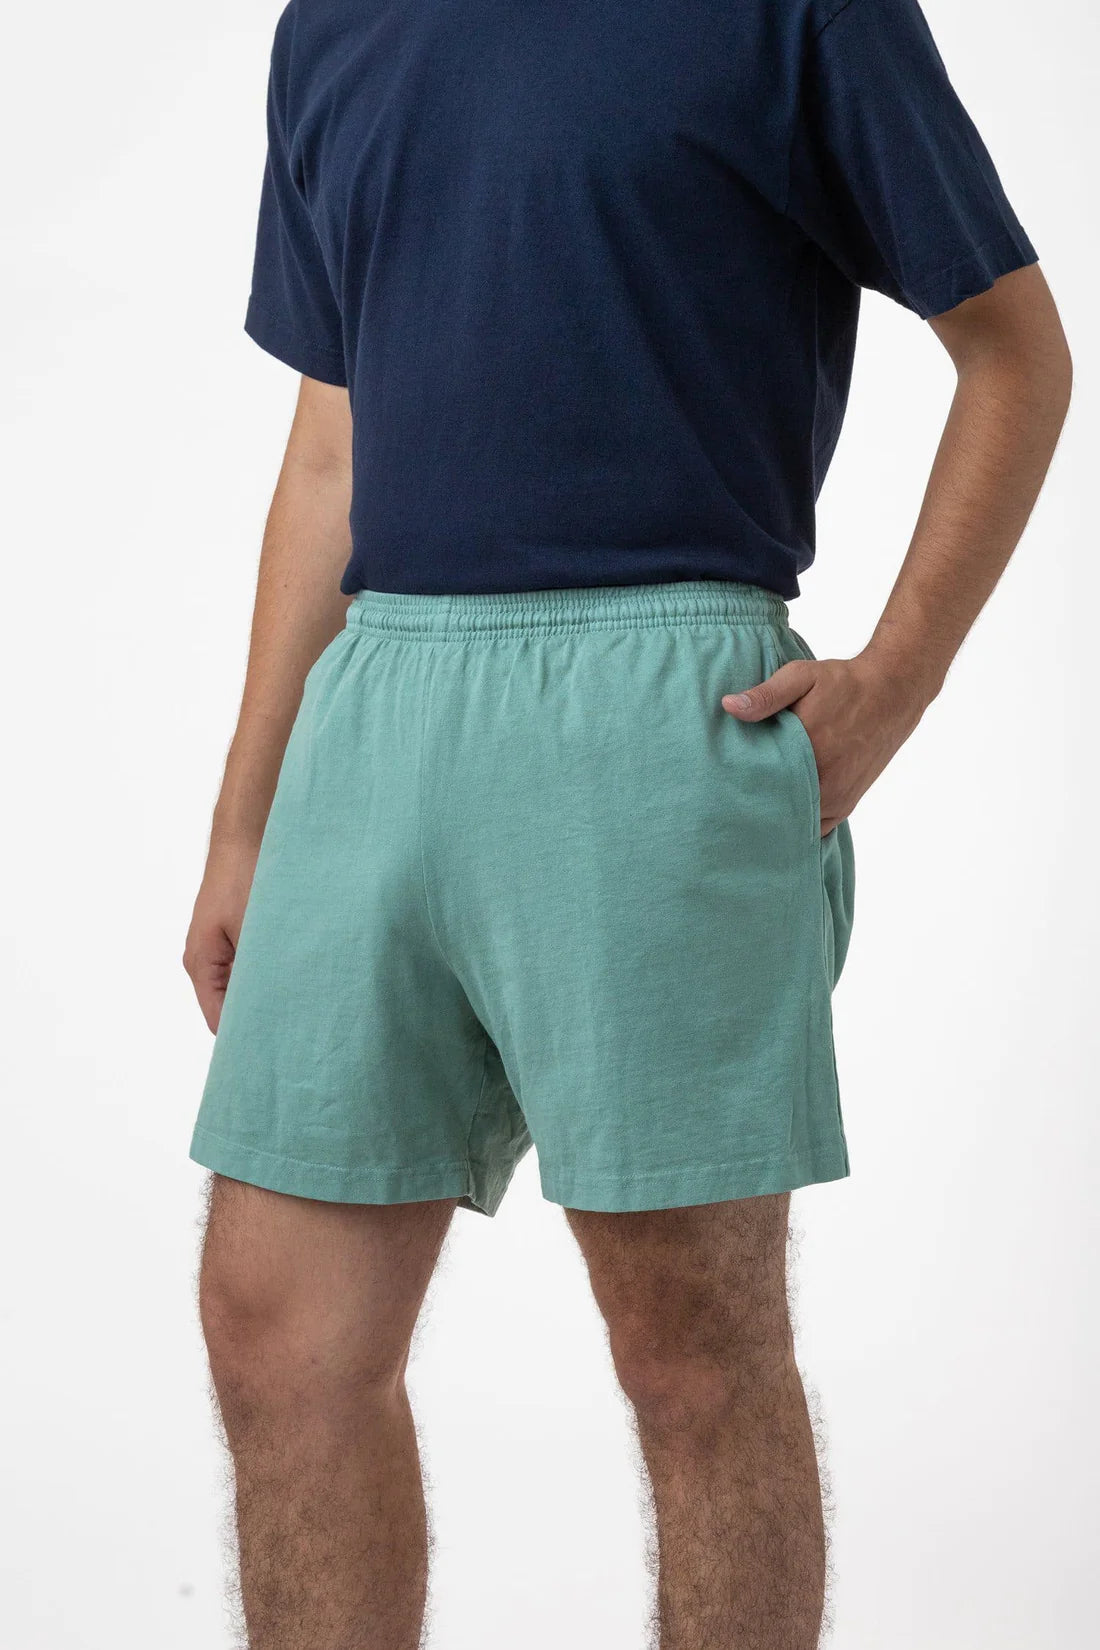 Los Angeles Apparel - 1242GD - Heavy Jersey Garment Dye Gym Shorts